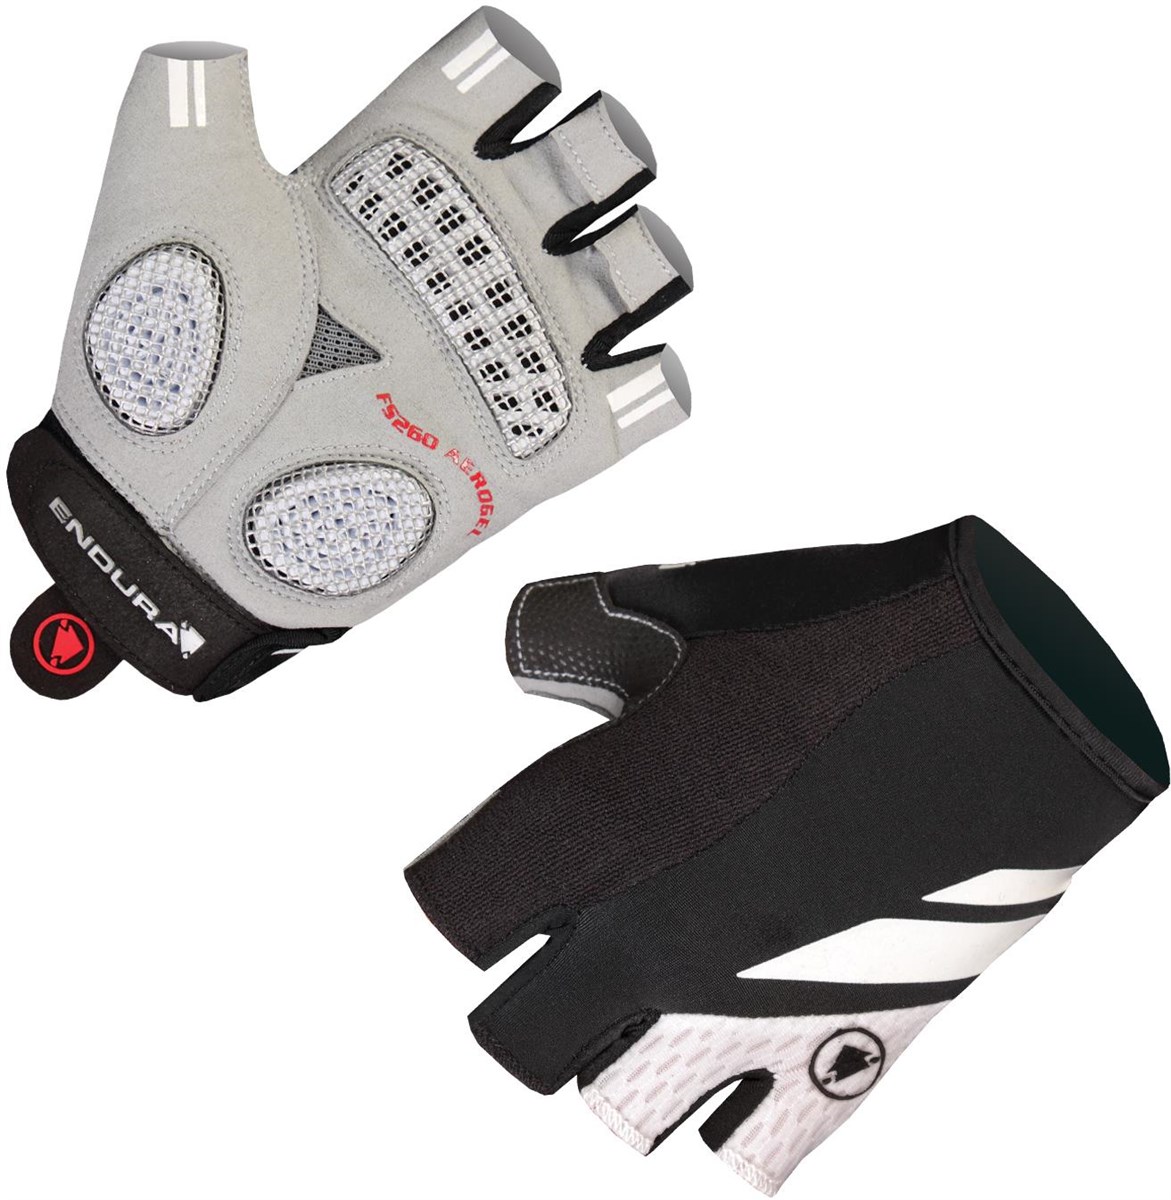 Endura FS260 Pro Aerogel II Short Finger Cycling Glove